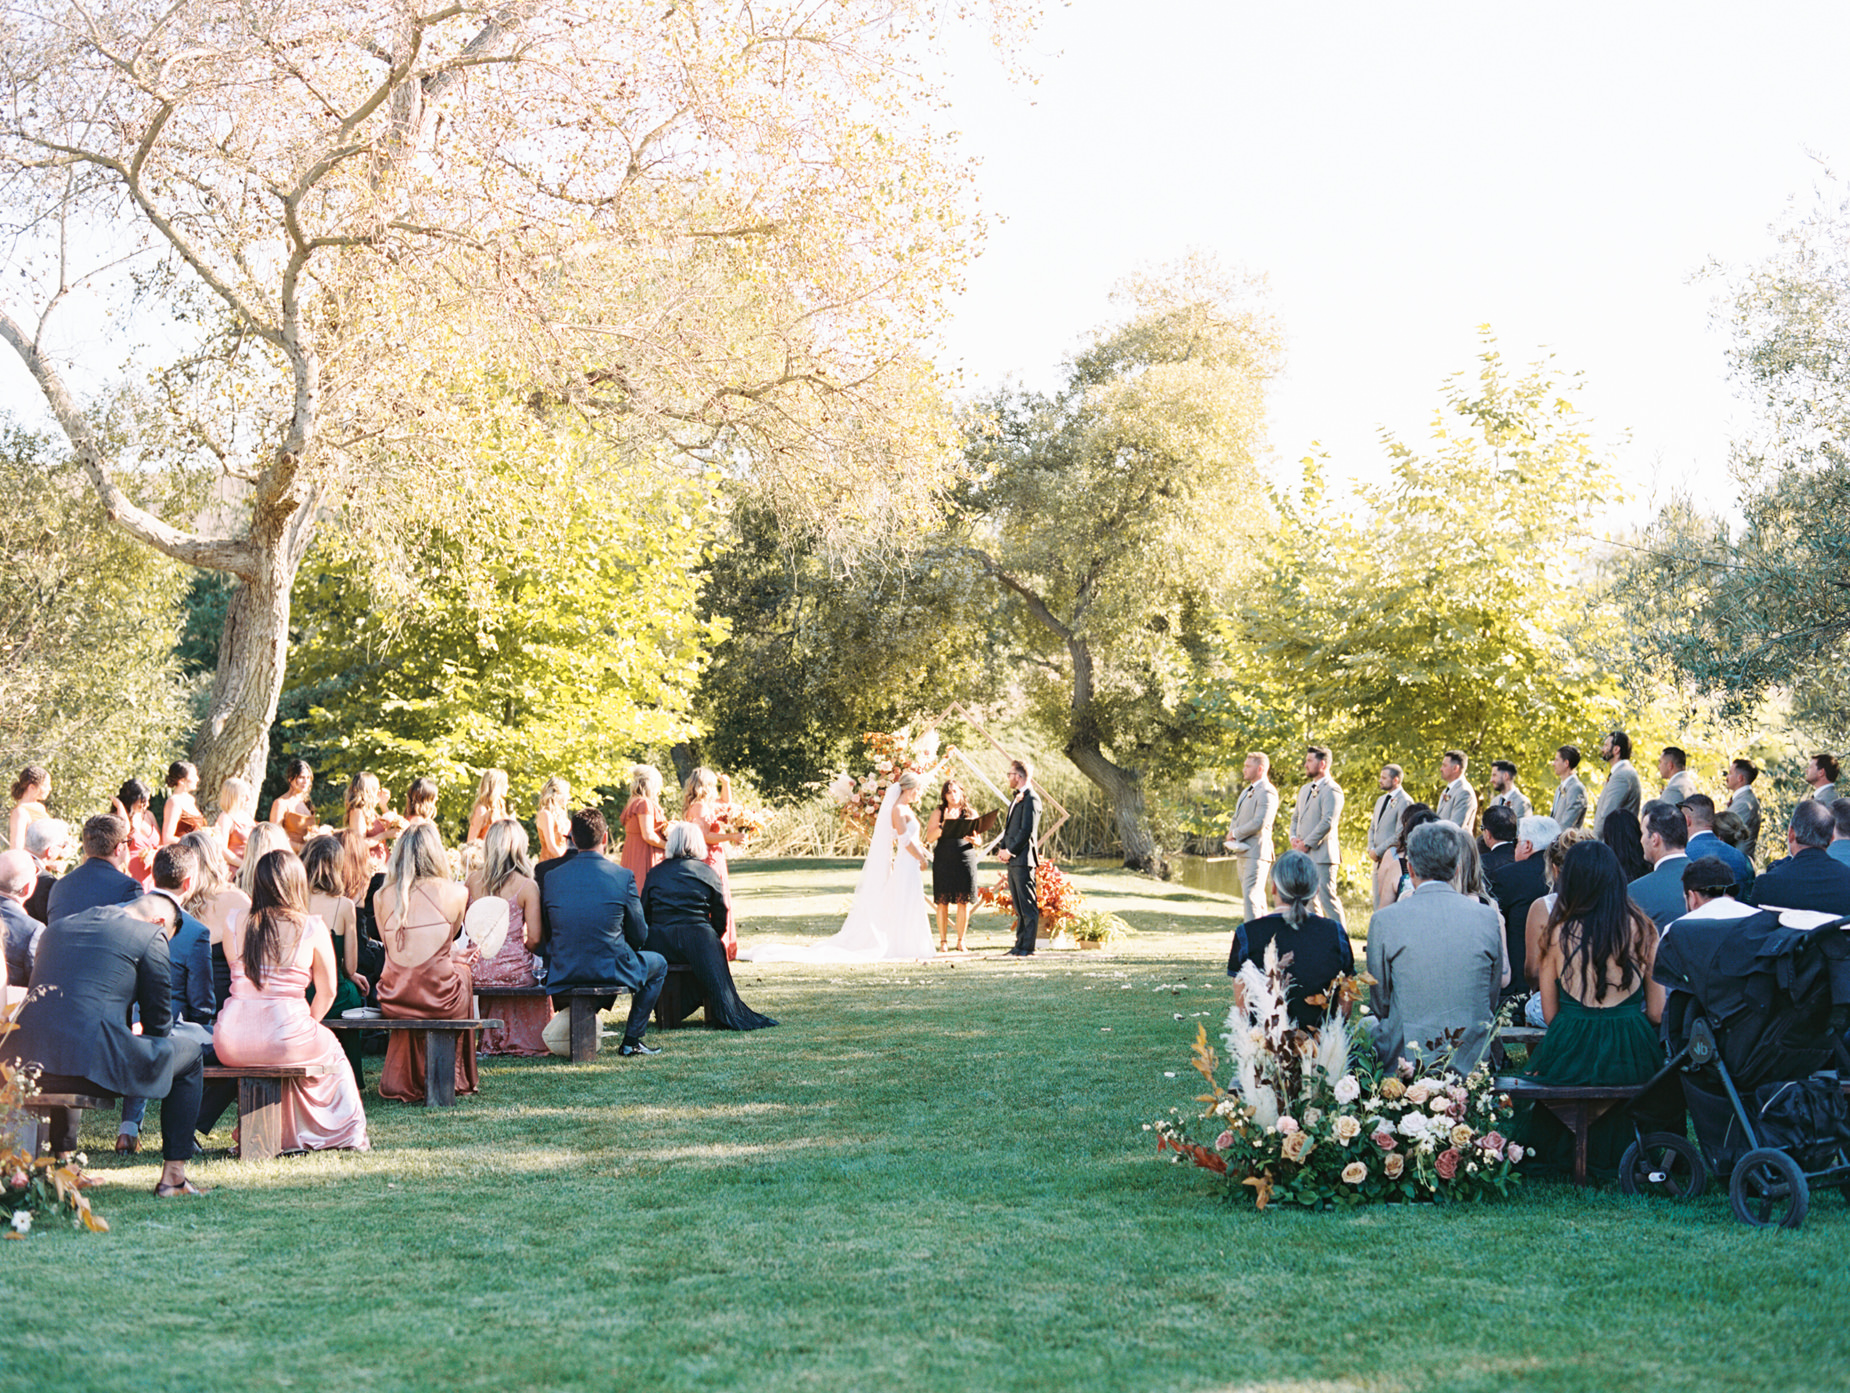 Greengate Ranch and Vineyard wedding in San Luis Obispo